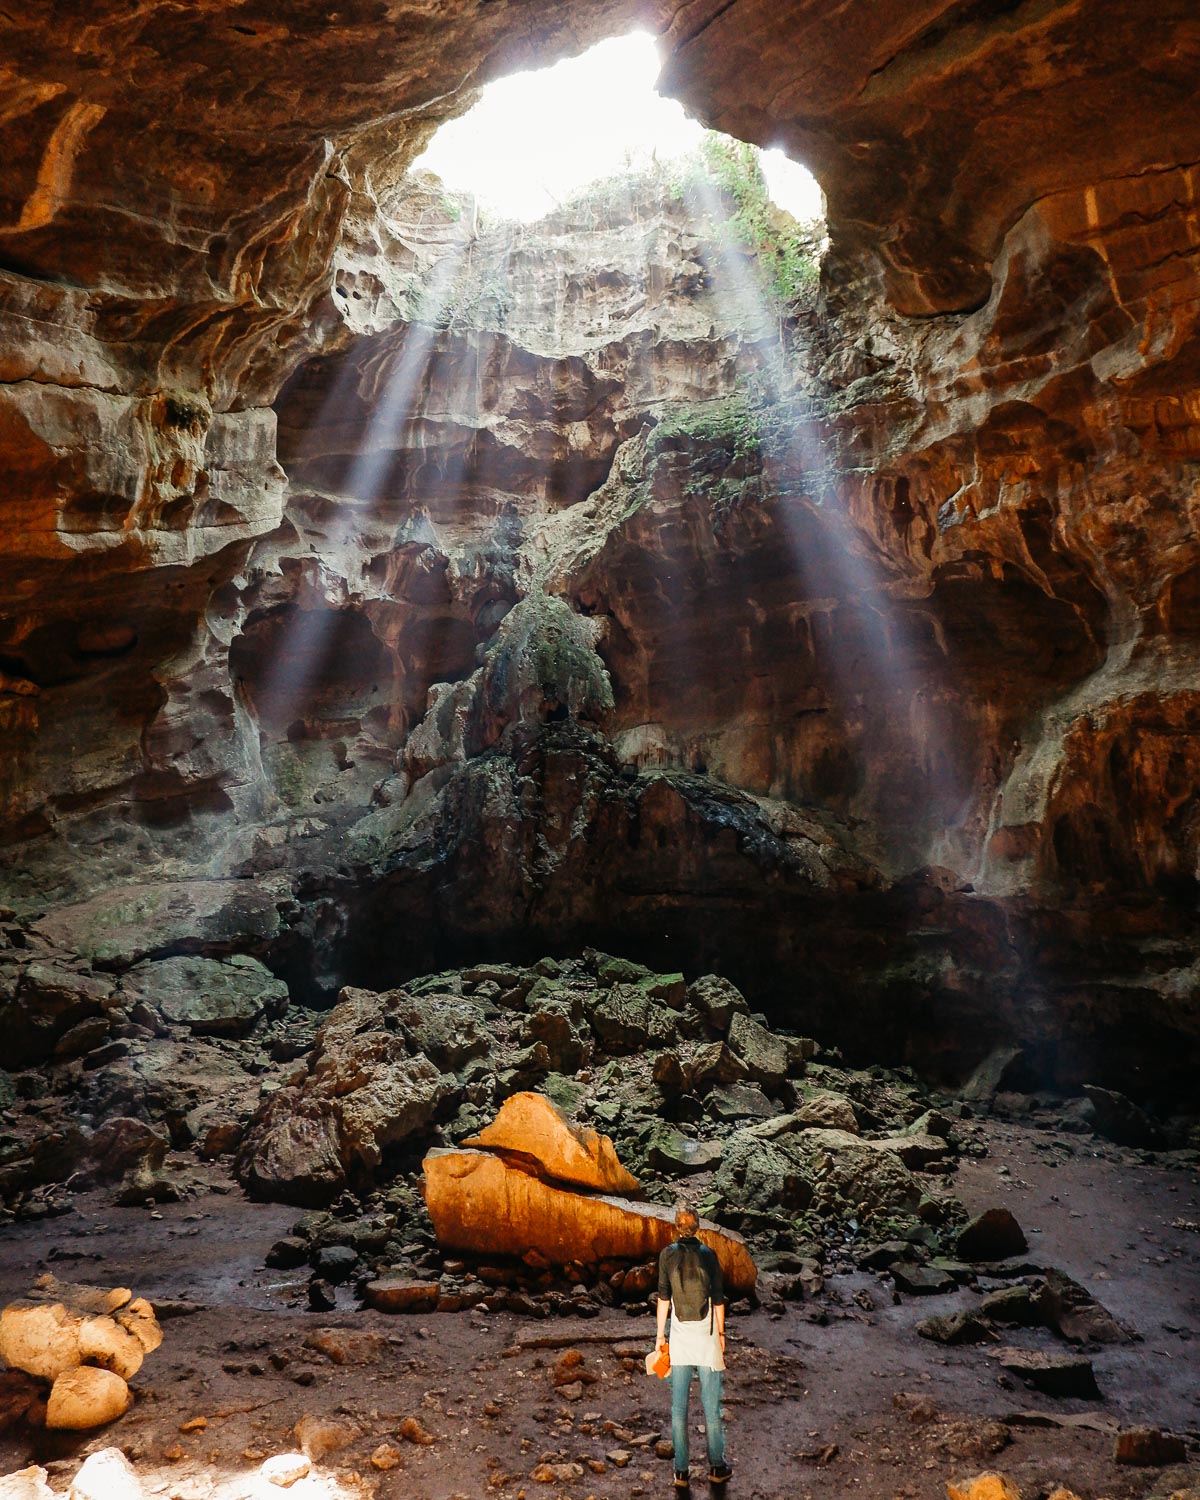 Las cuevas de Mantetzulel, des grottes impressionnantes perdues dans la foret